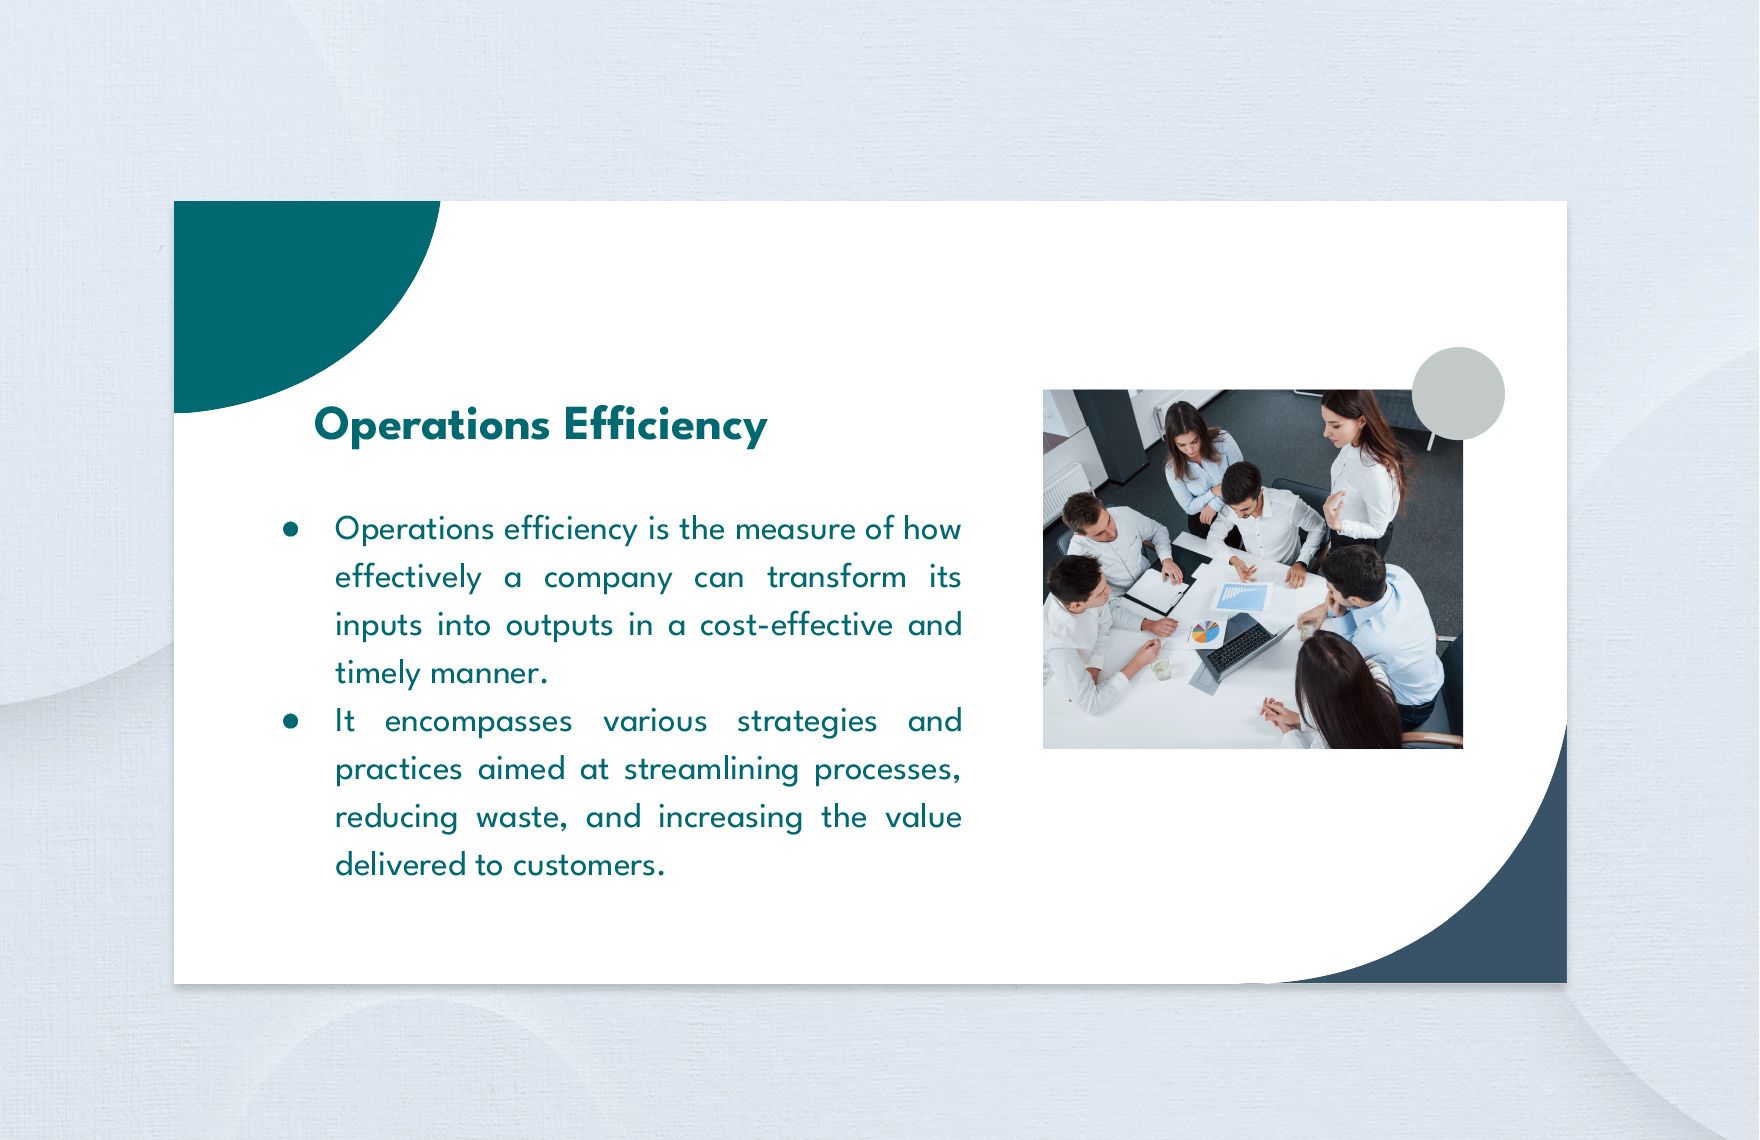 Operations Efficiency Enhancement Presentation Template